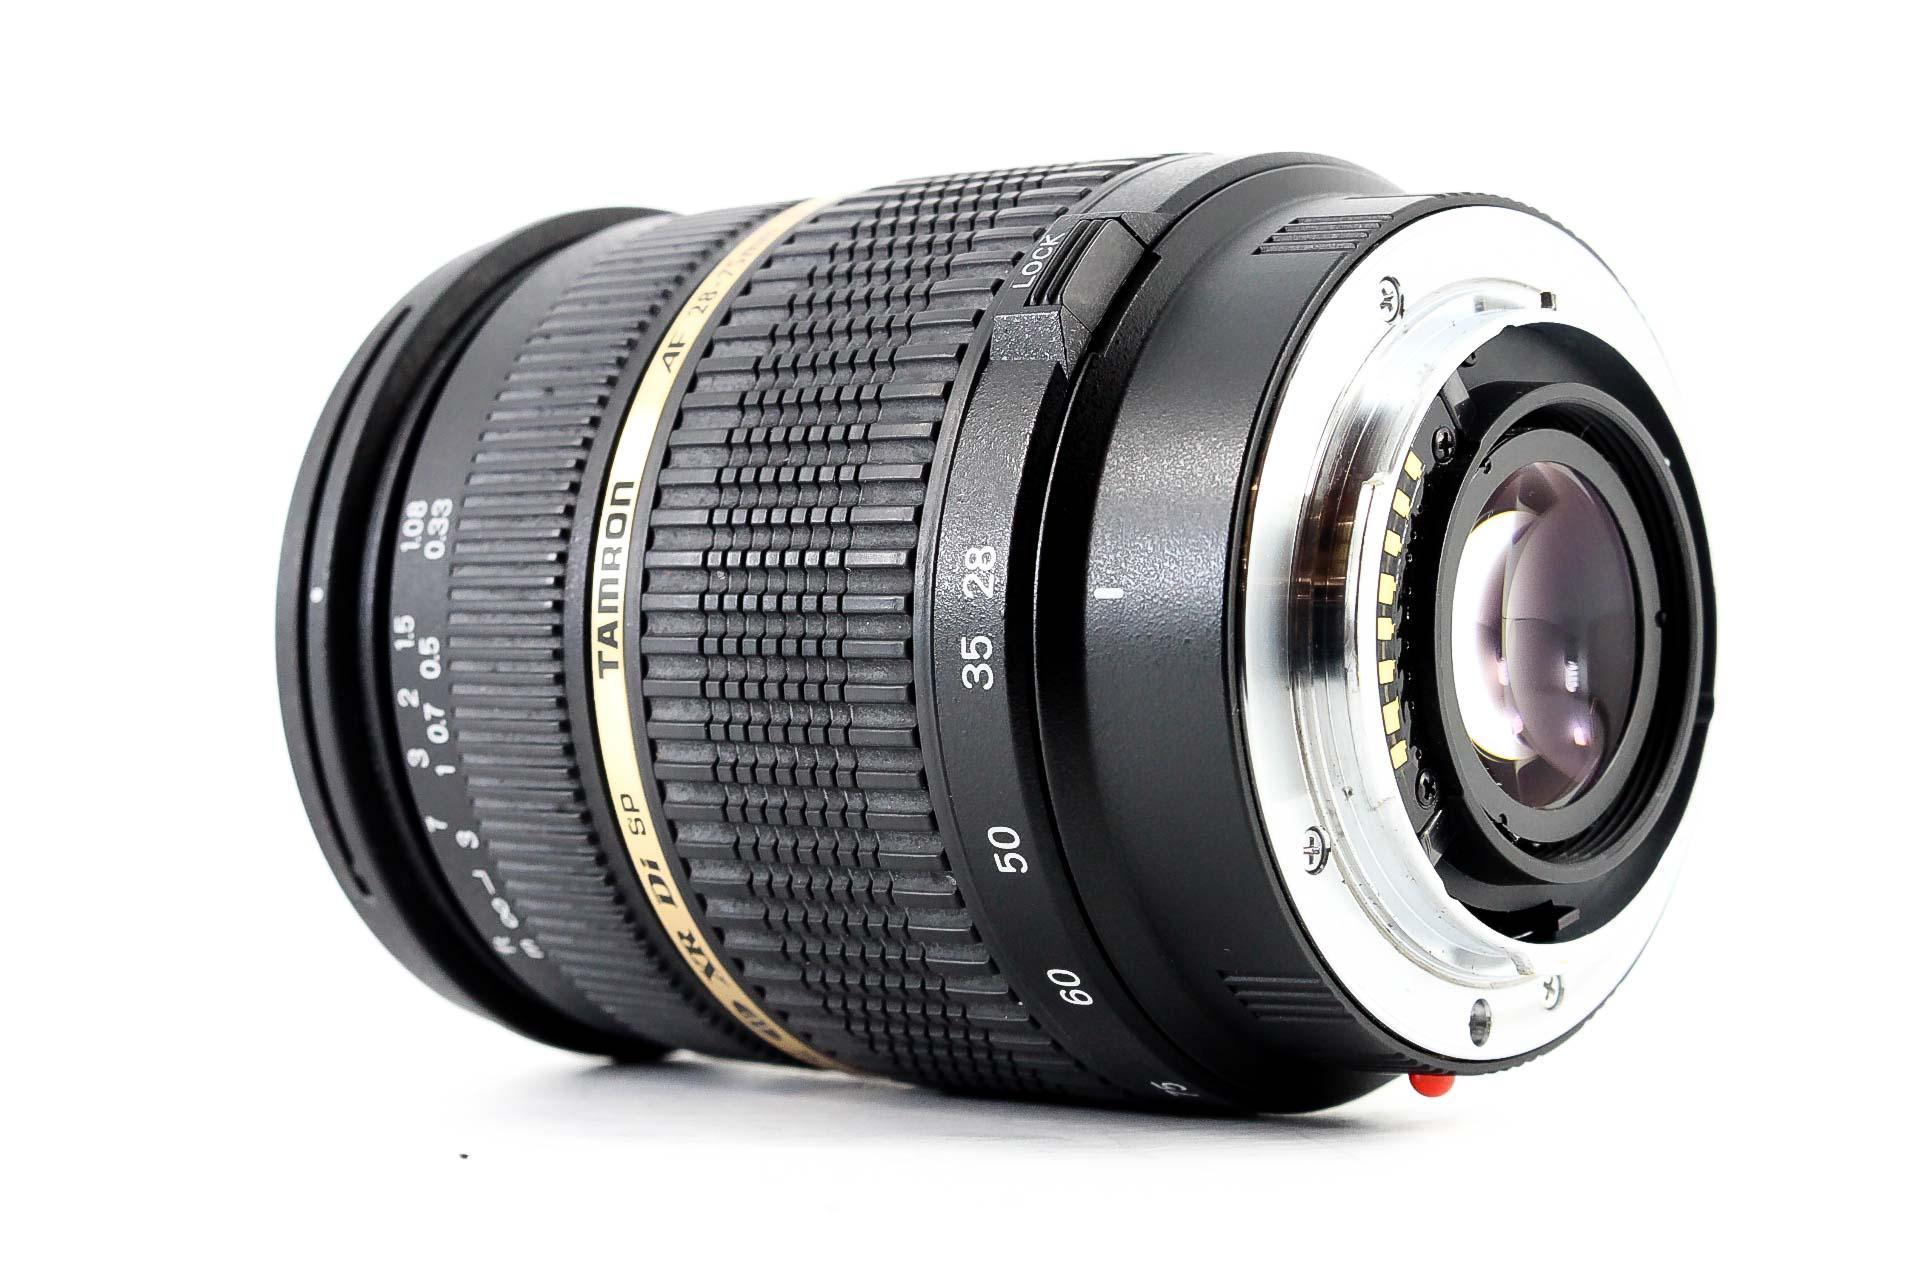 Tamron SP AF 28-75mm f/2.8 XR Di LD Aspherical (IF) Macro Sony Lens